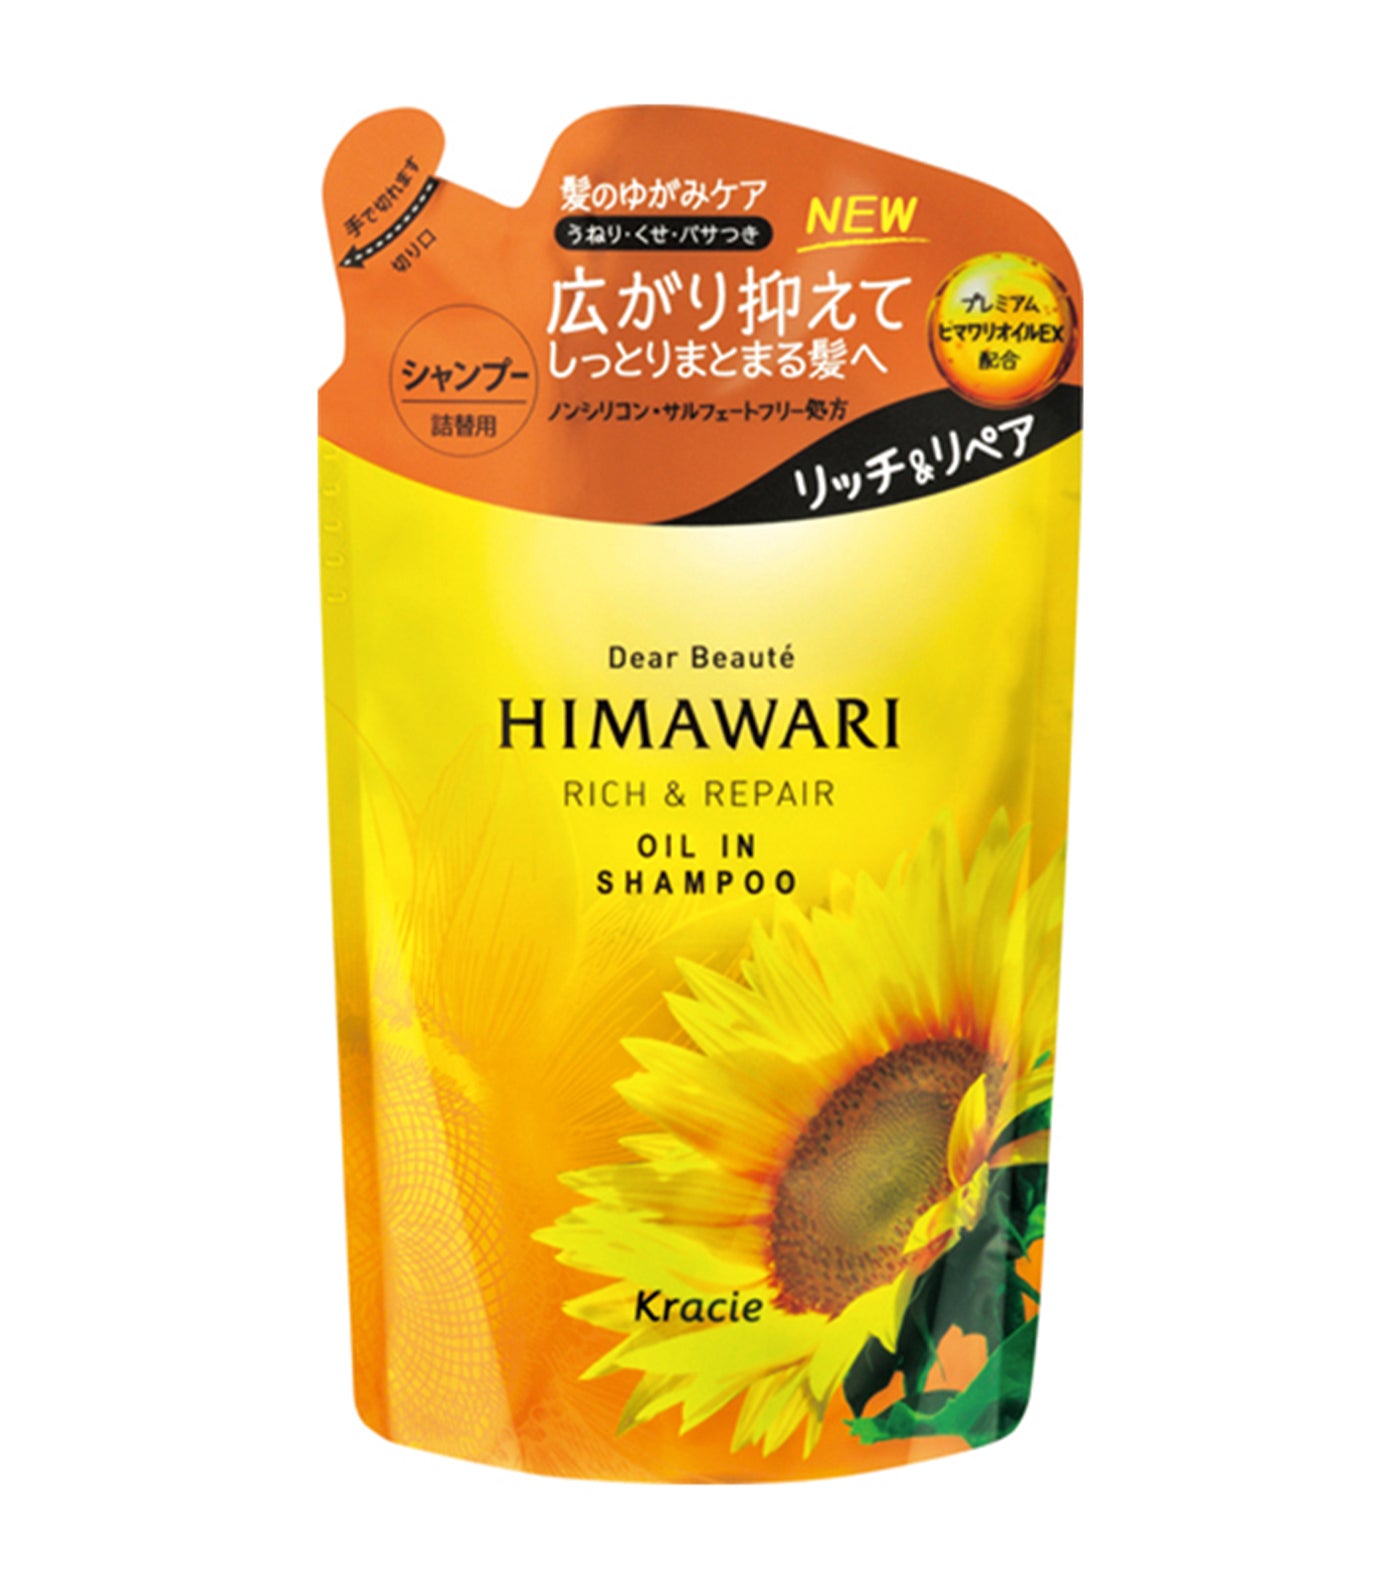 Dear Beaute Himawari Rich and Repair Oil in Shampoo Refill Pack